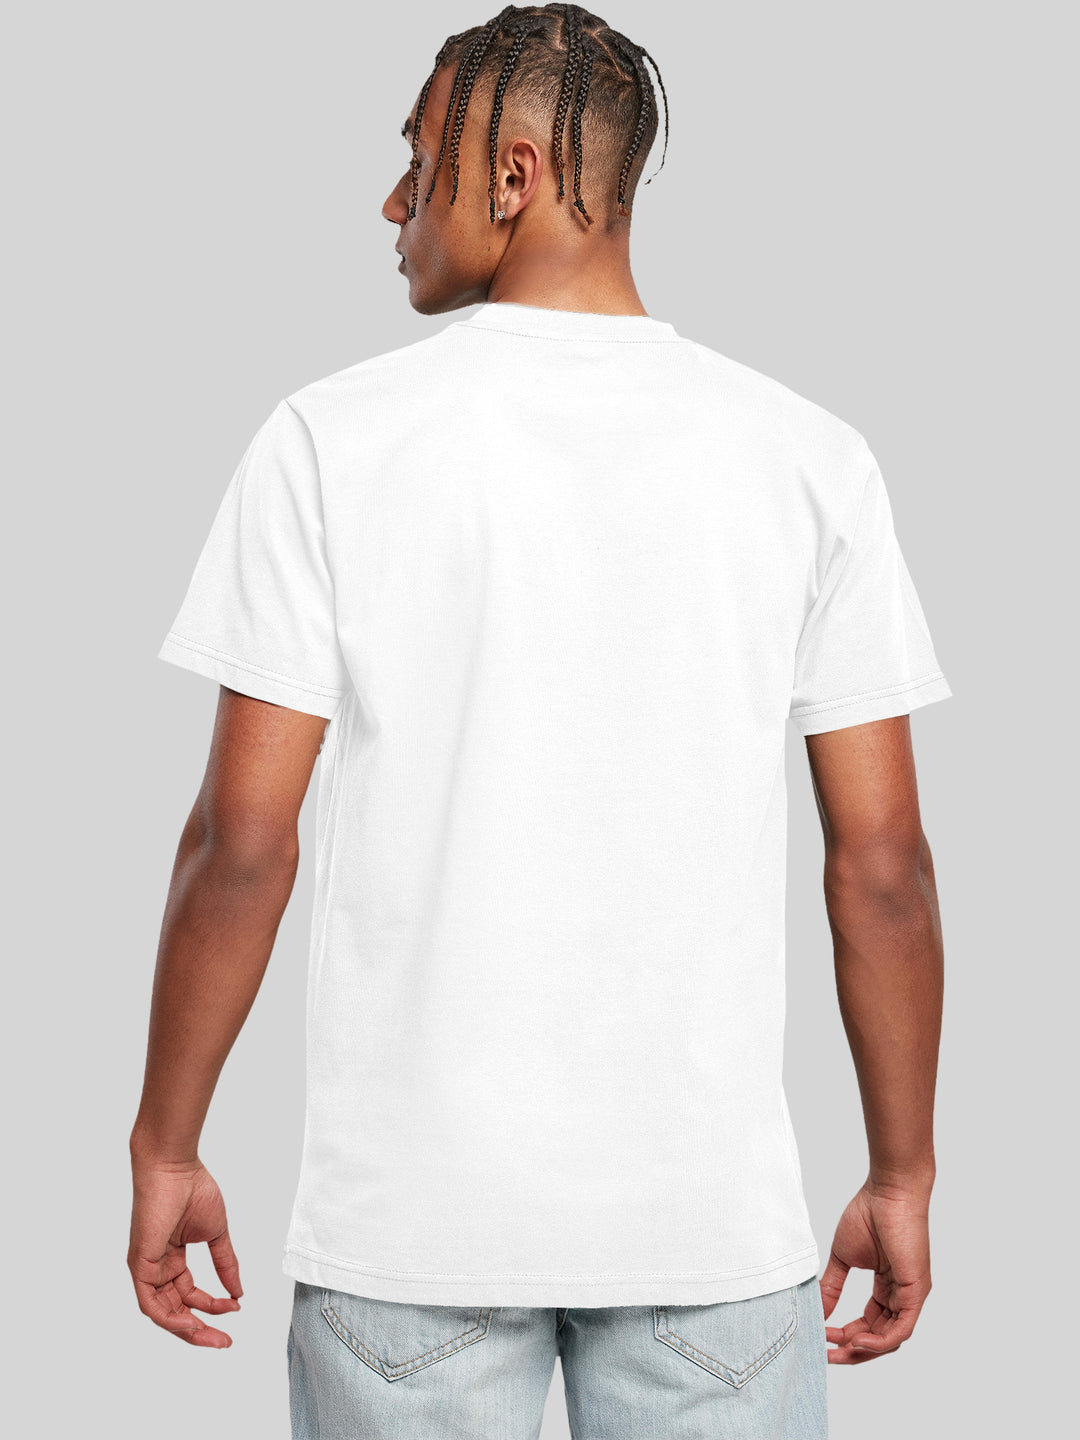 The Beatles T-Shirt | Drop T Logo Black | Premium Men T Shirt – F4NT4STIC | T-Shirts